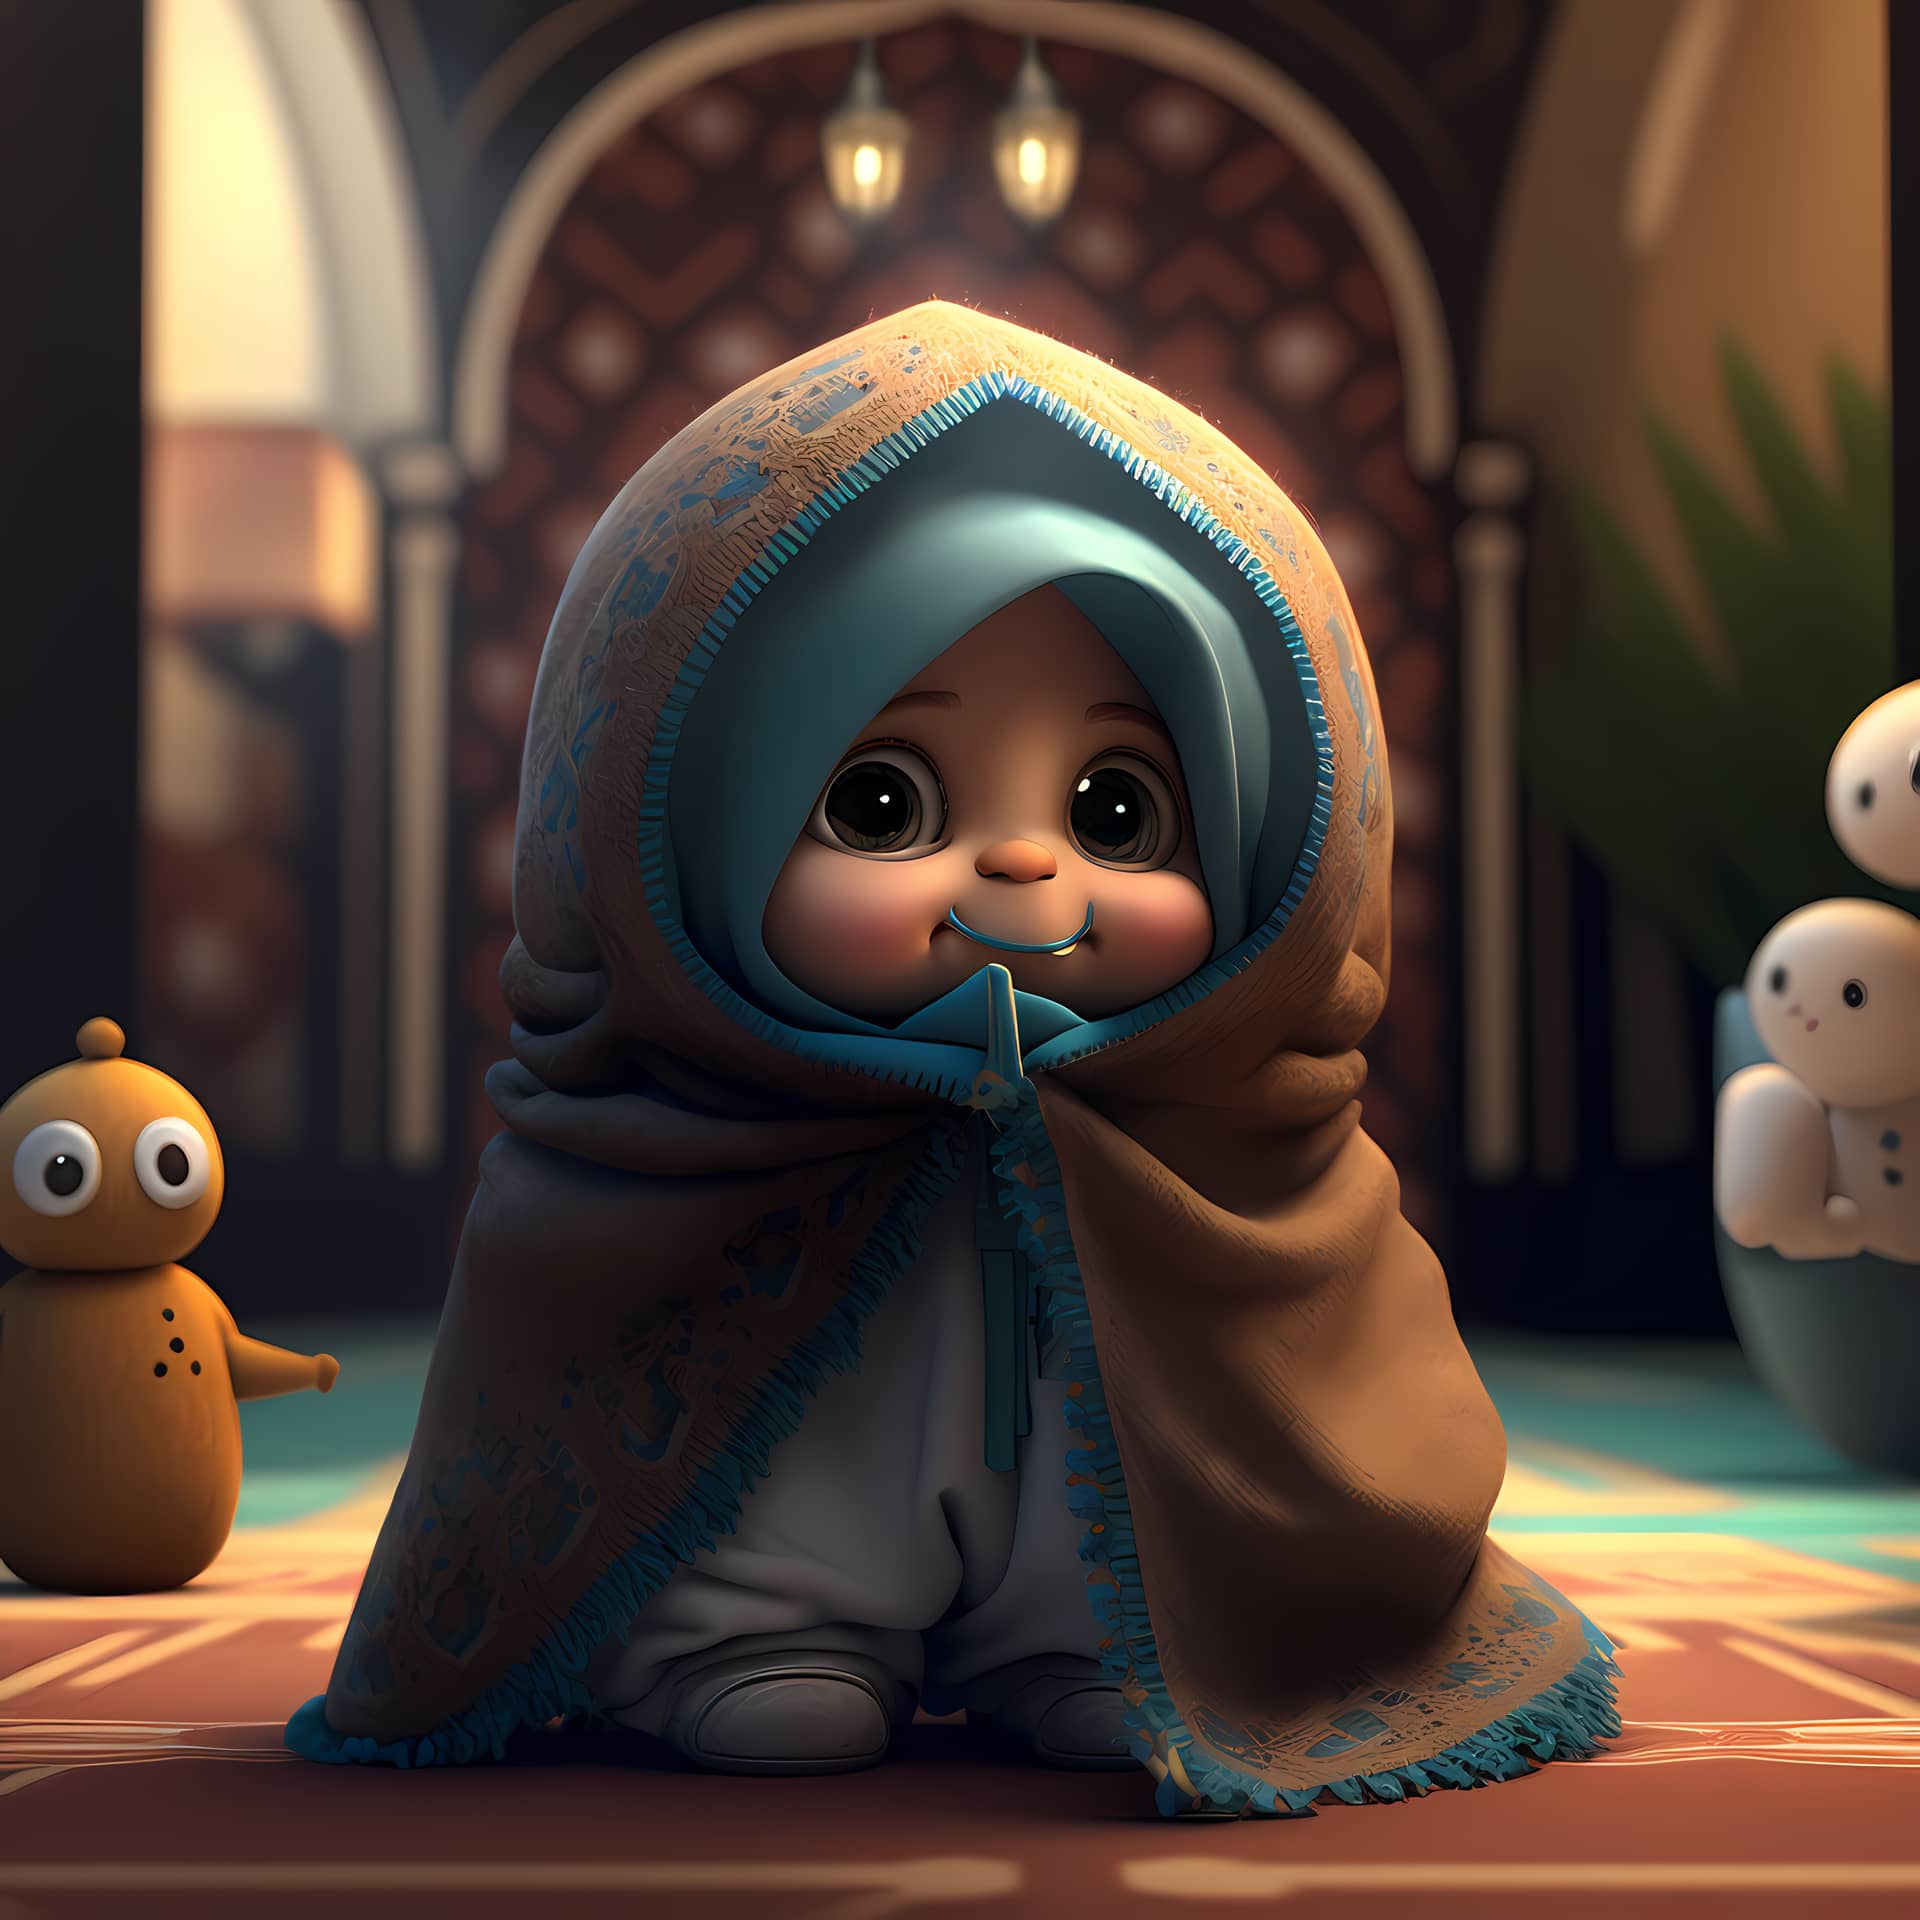 Adorable cute muslim children cartoon character 3d rendering colorful image